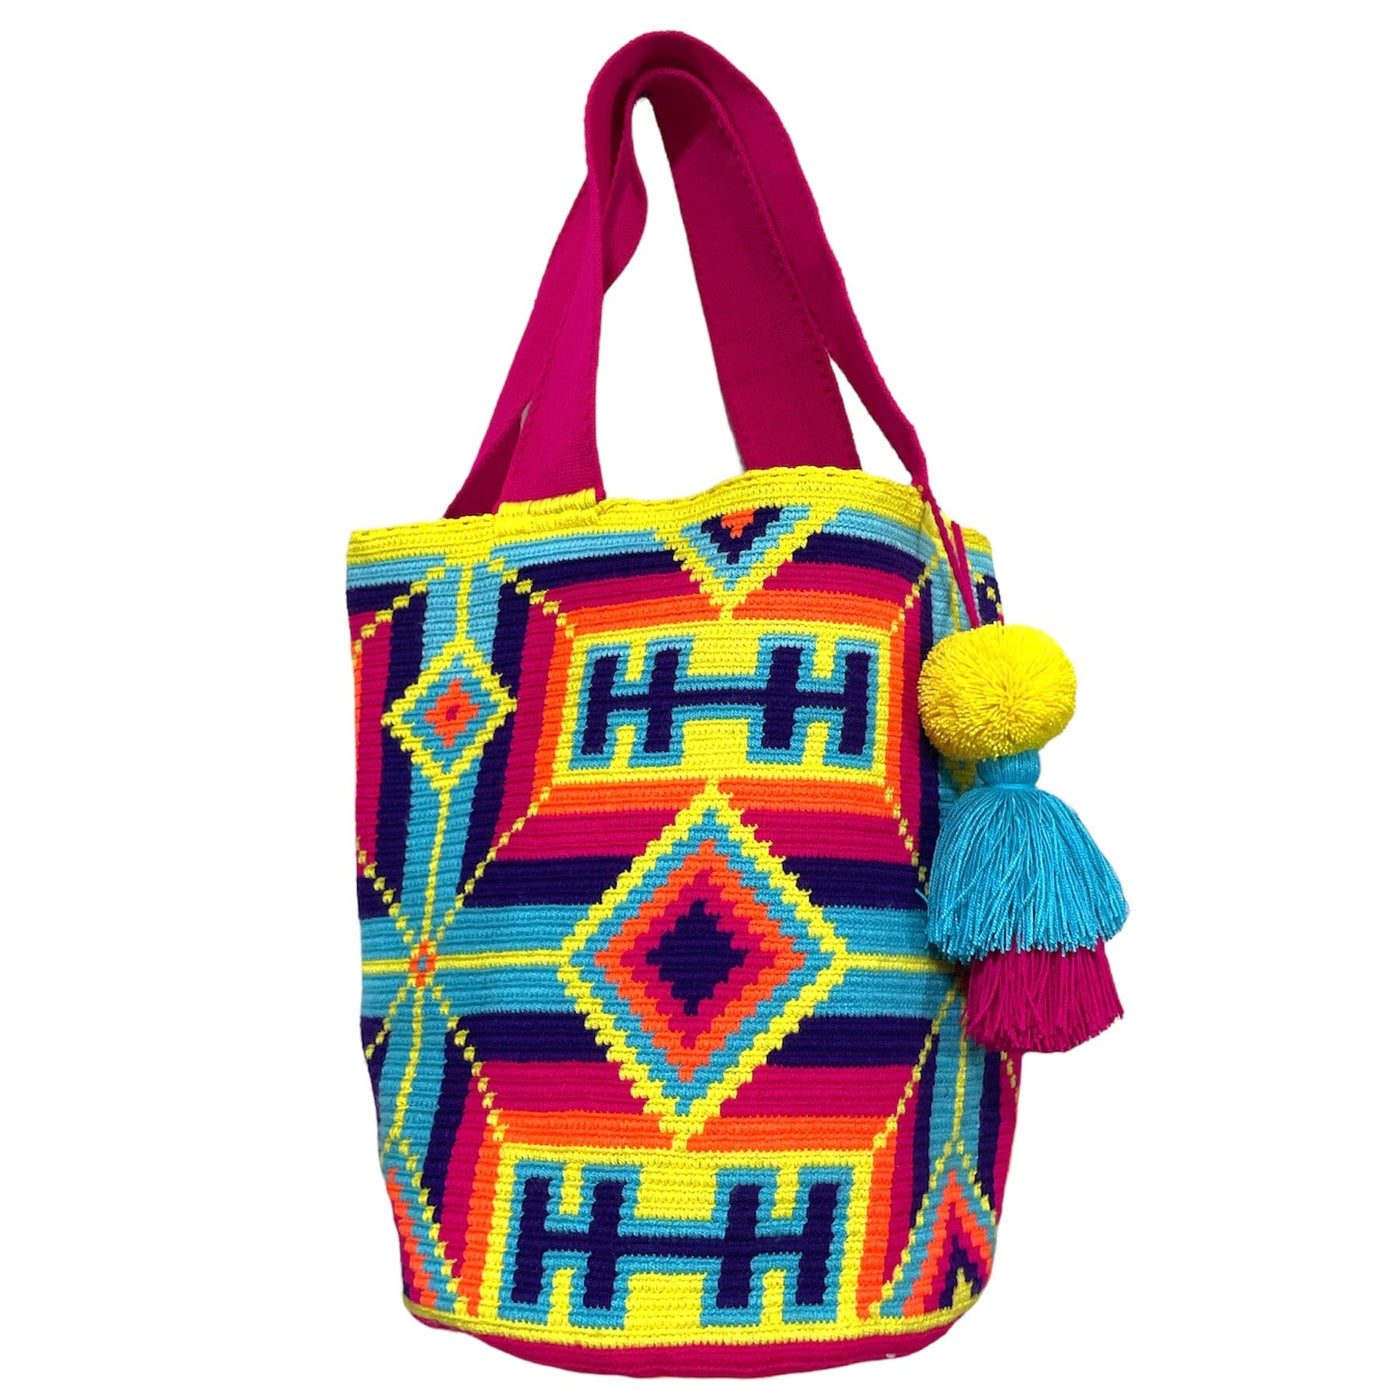 Fuschia Large Summer Tote Bag | Best Beach Tote Bags for women | Colorful 4u